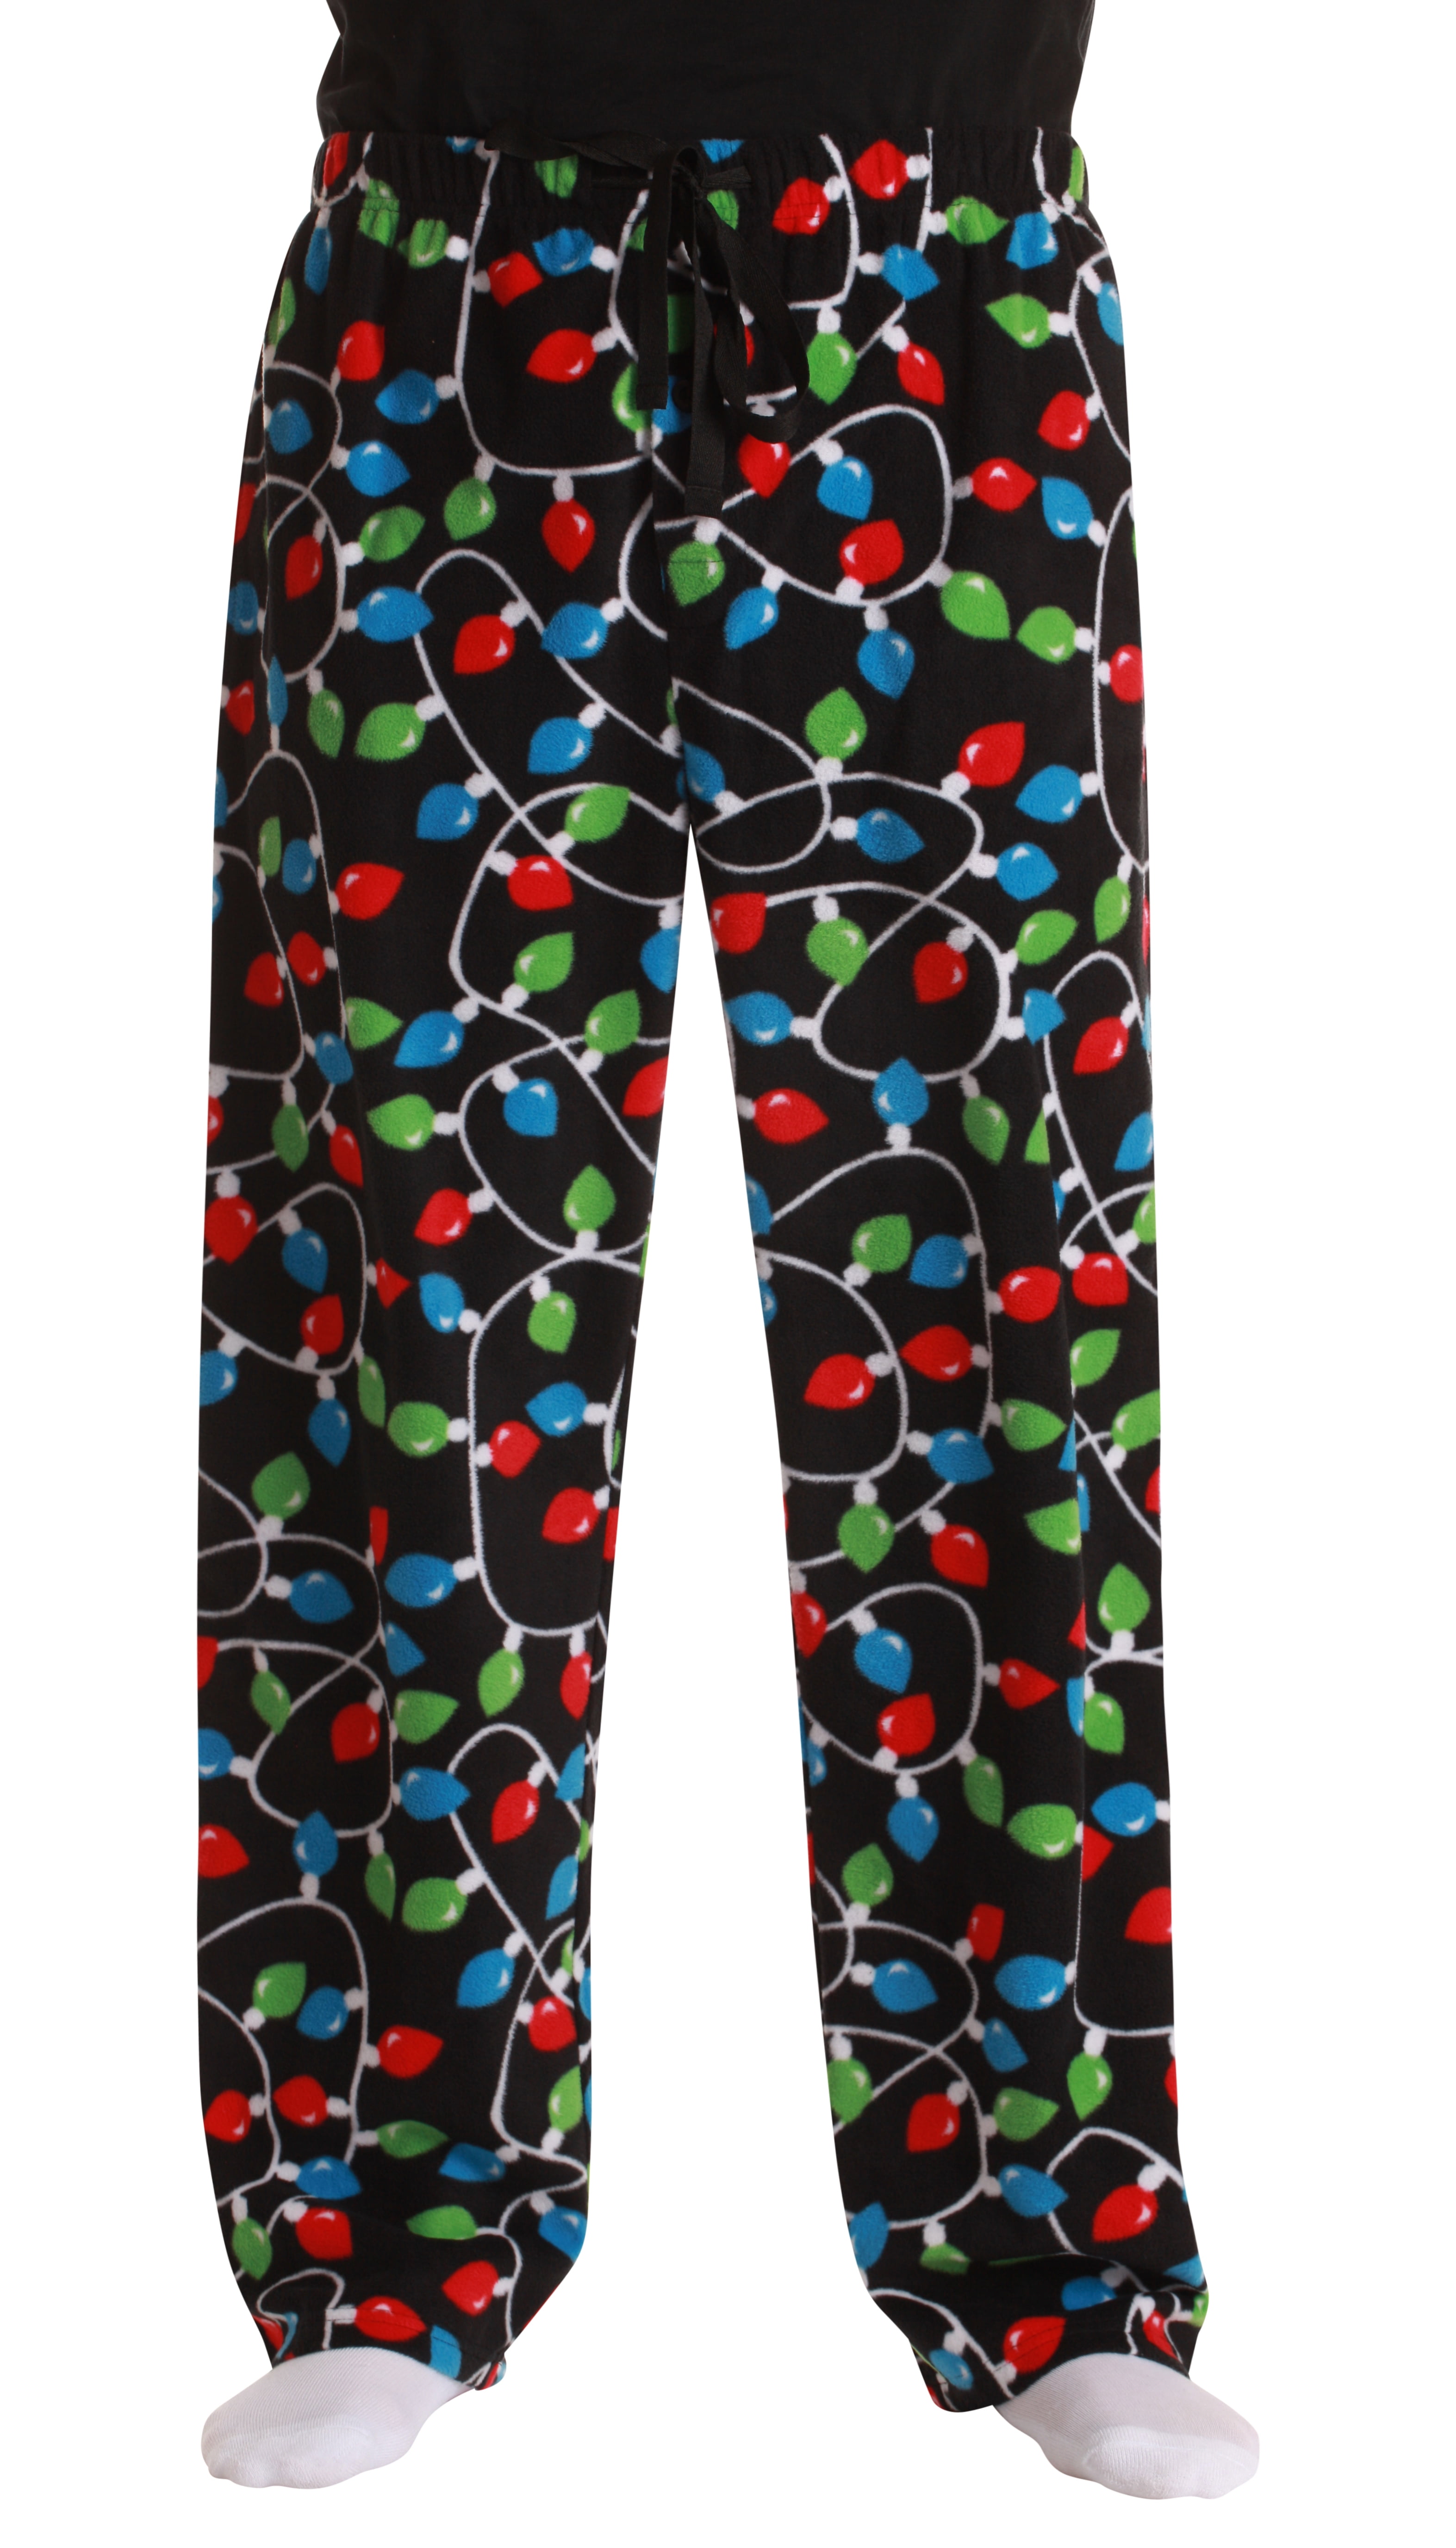 followme Polar Fleece Pajama Pants for Men Sleepwear PJs (Black - Candy  Cane, Medium) 